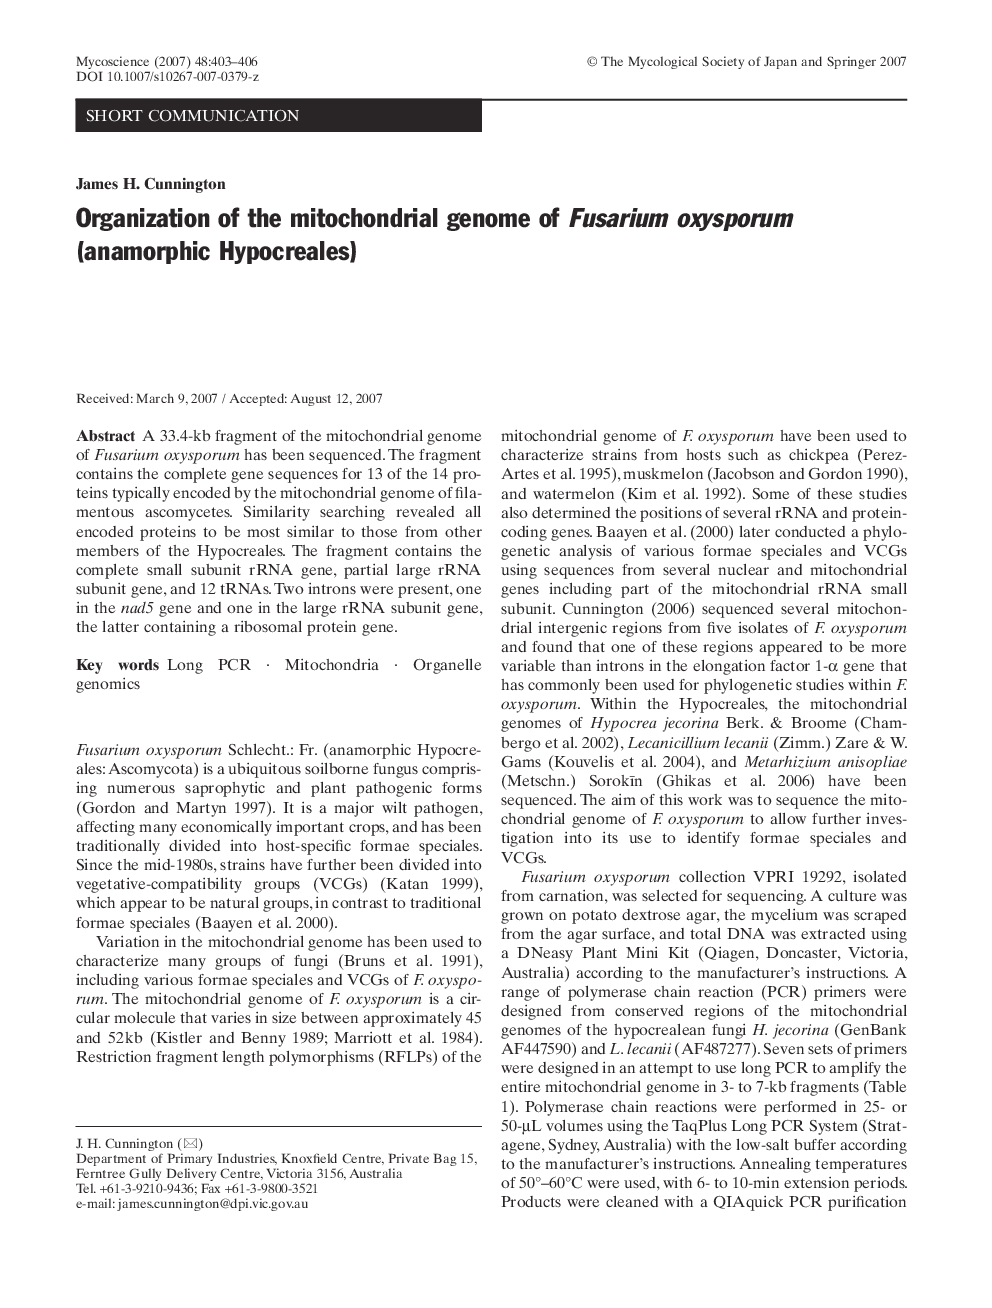 Organization of the mitochondrial genome of Fusarium oxysporum (anamorphic Hypocreales)